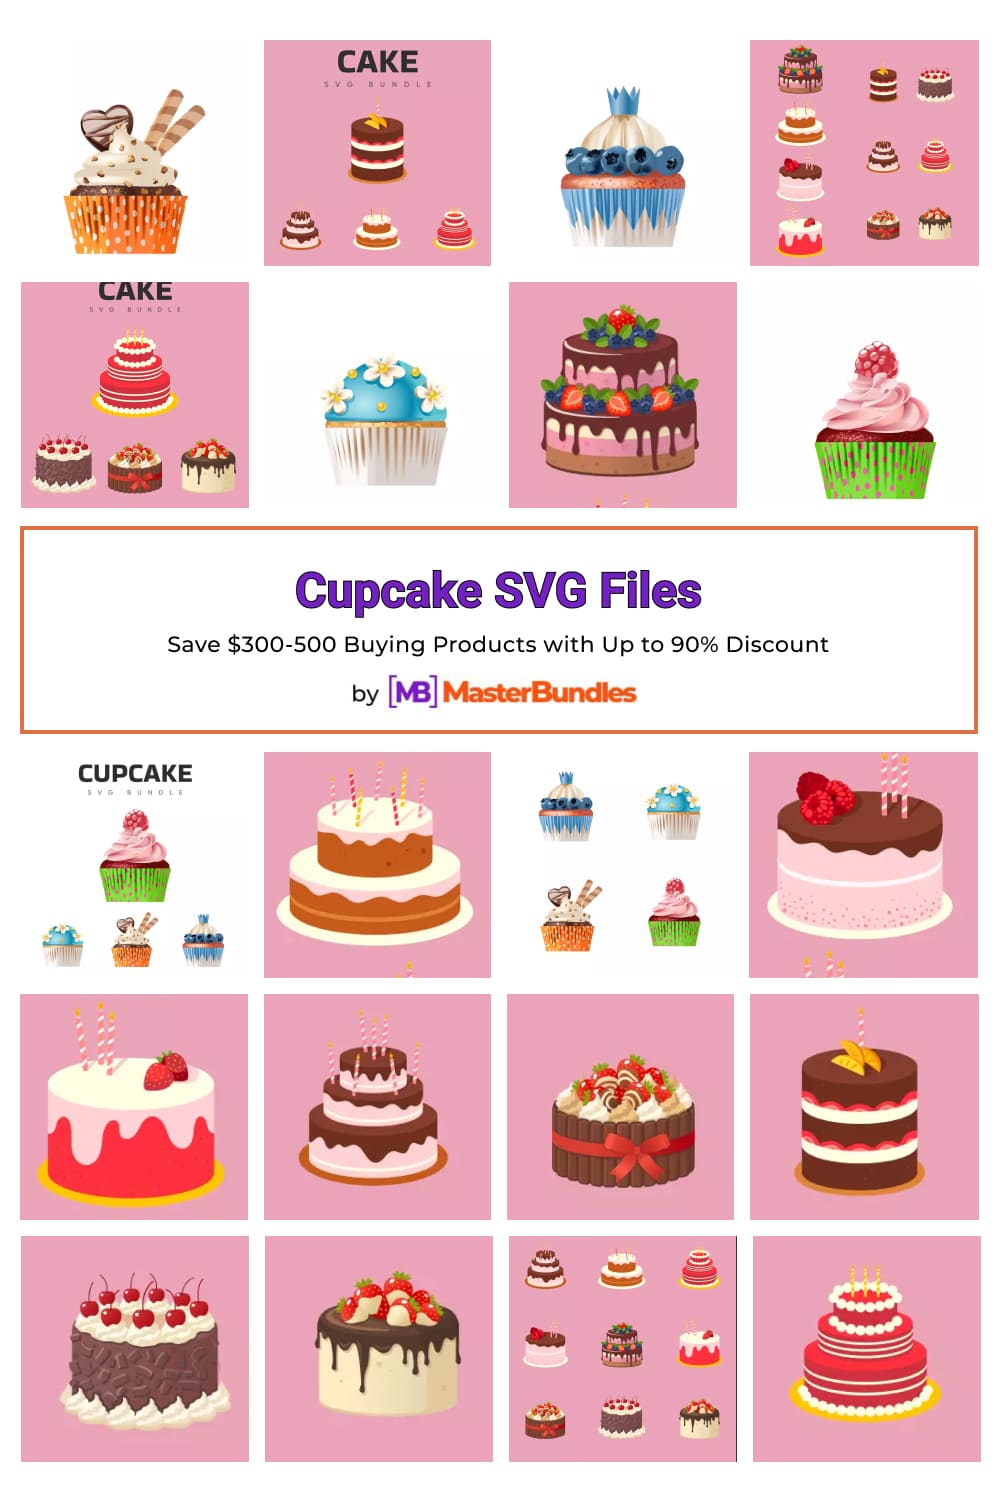 Cupcake SVG Files Pinterest image.